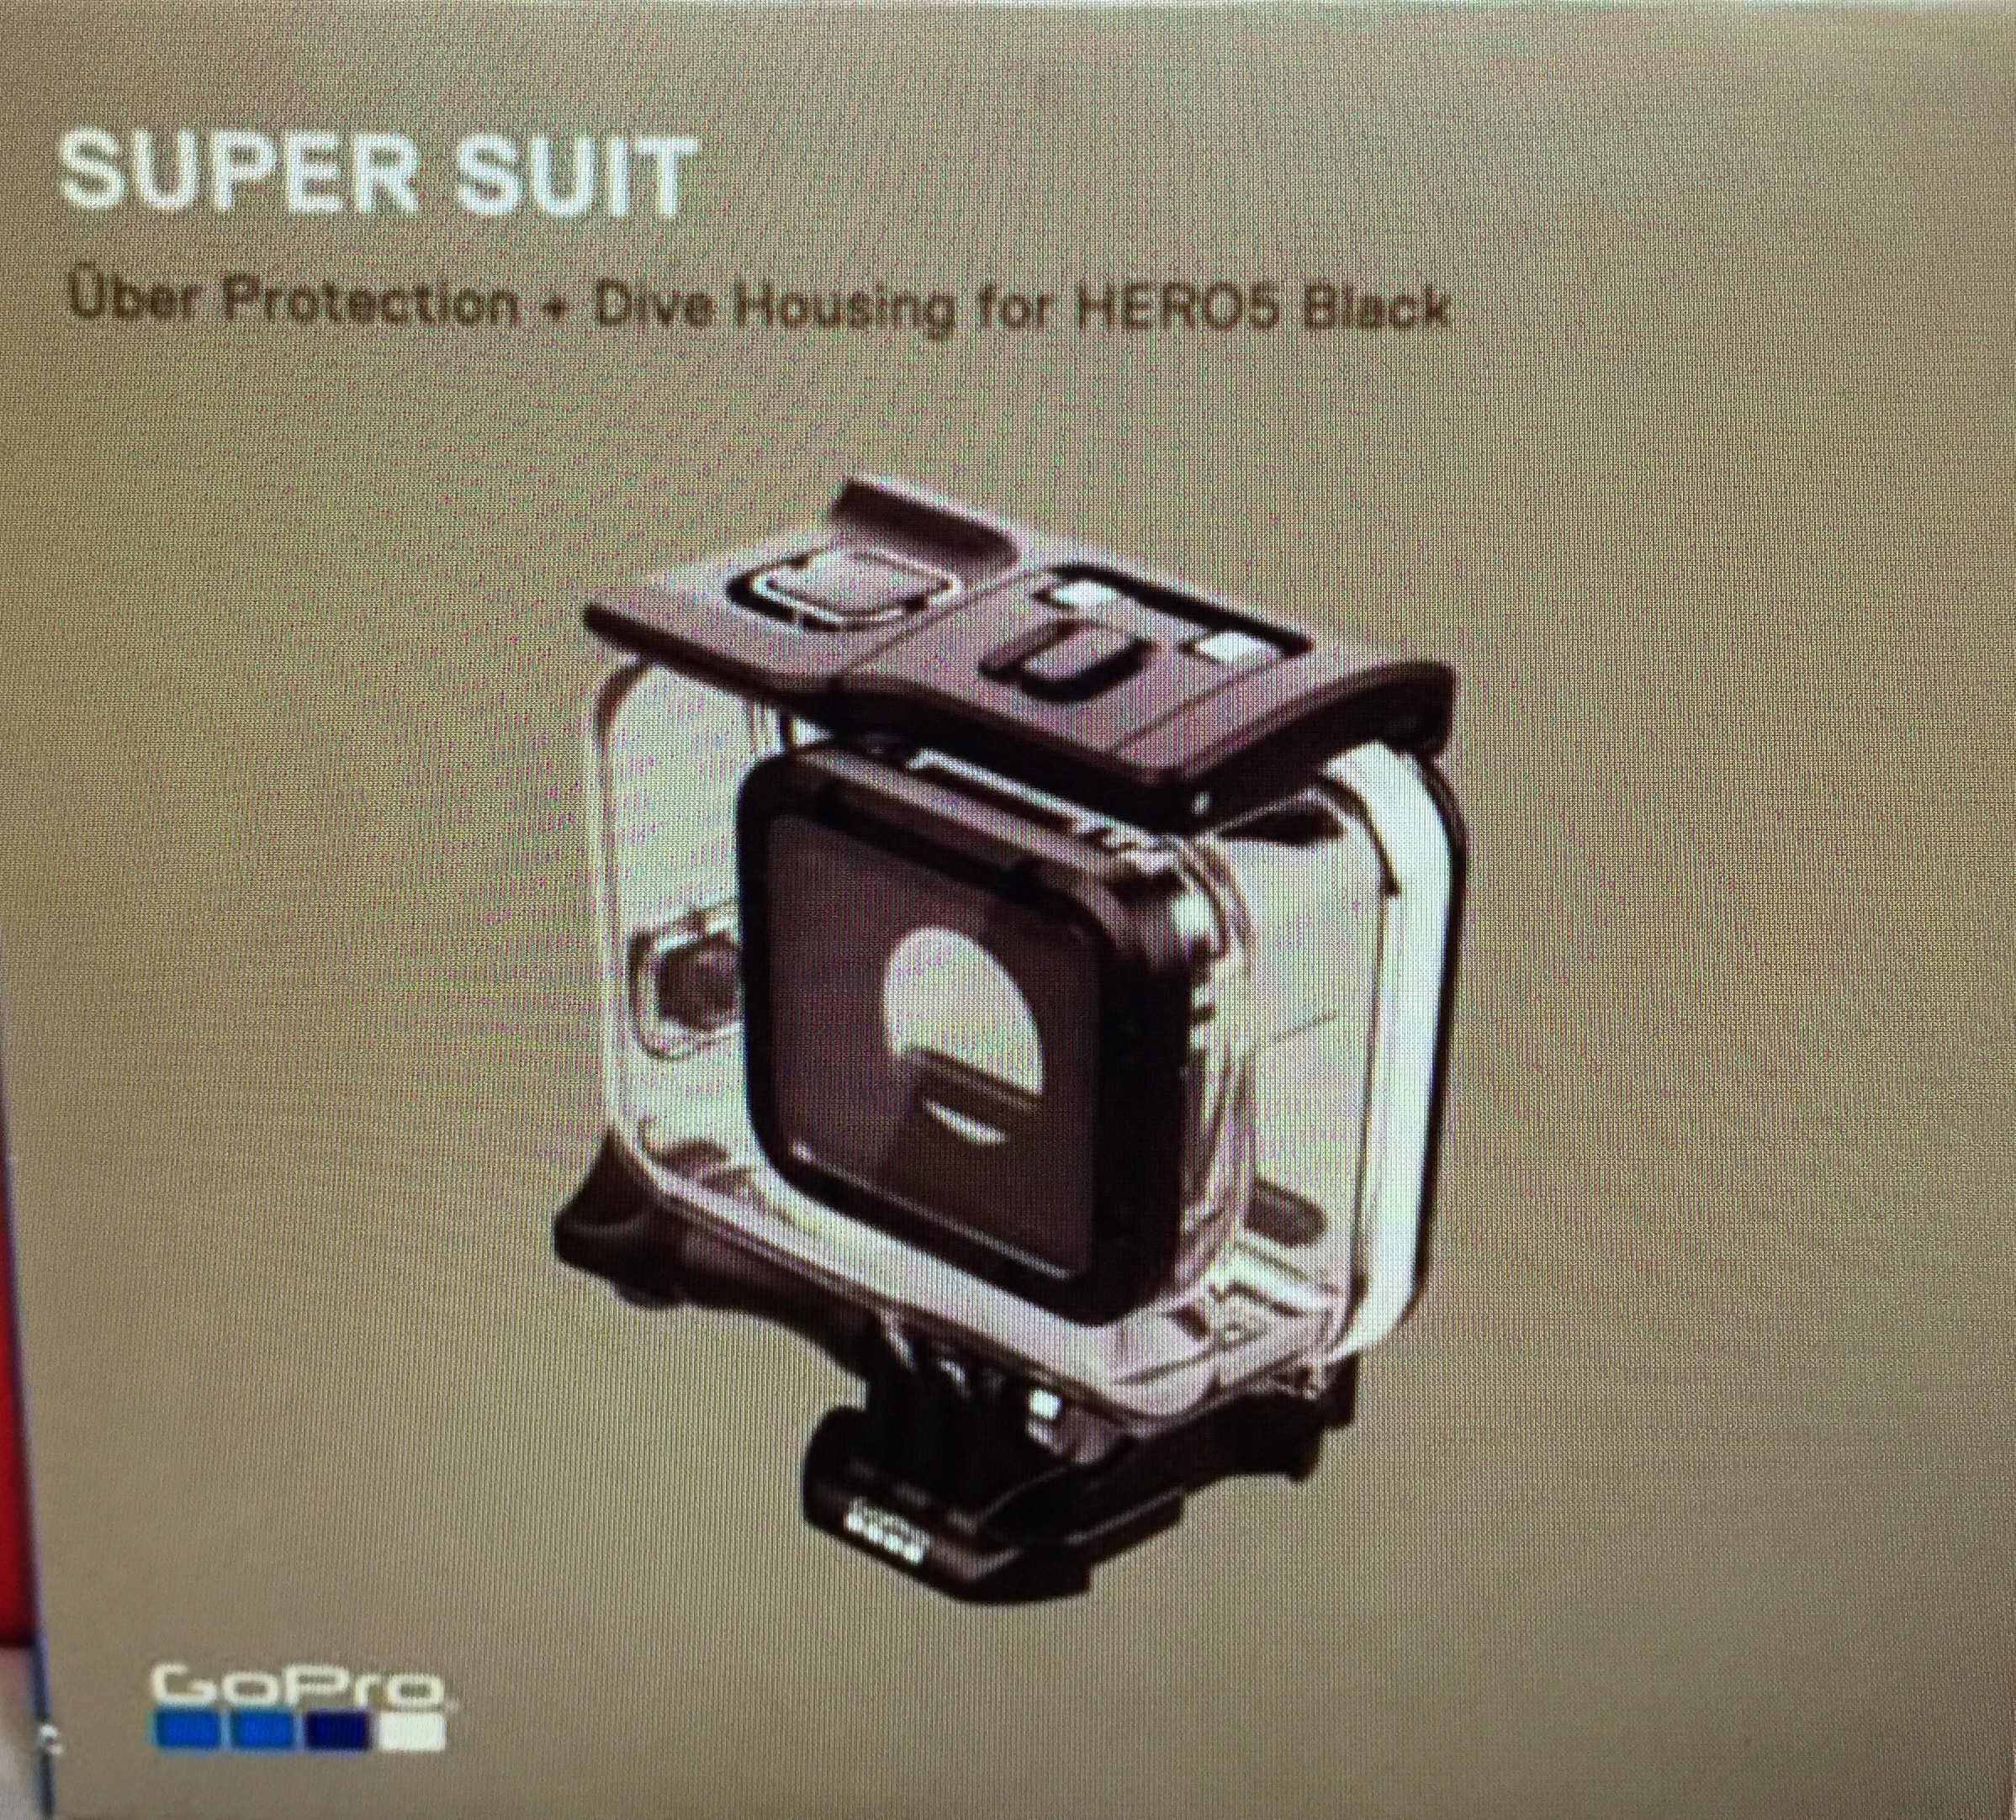 GoPro Super Suit Dive Housing for HERO5 Black